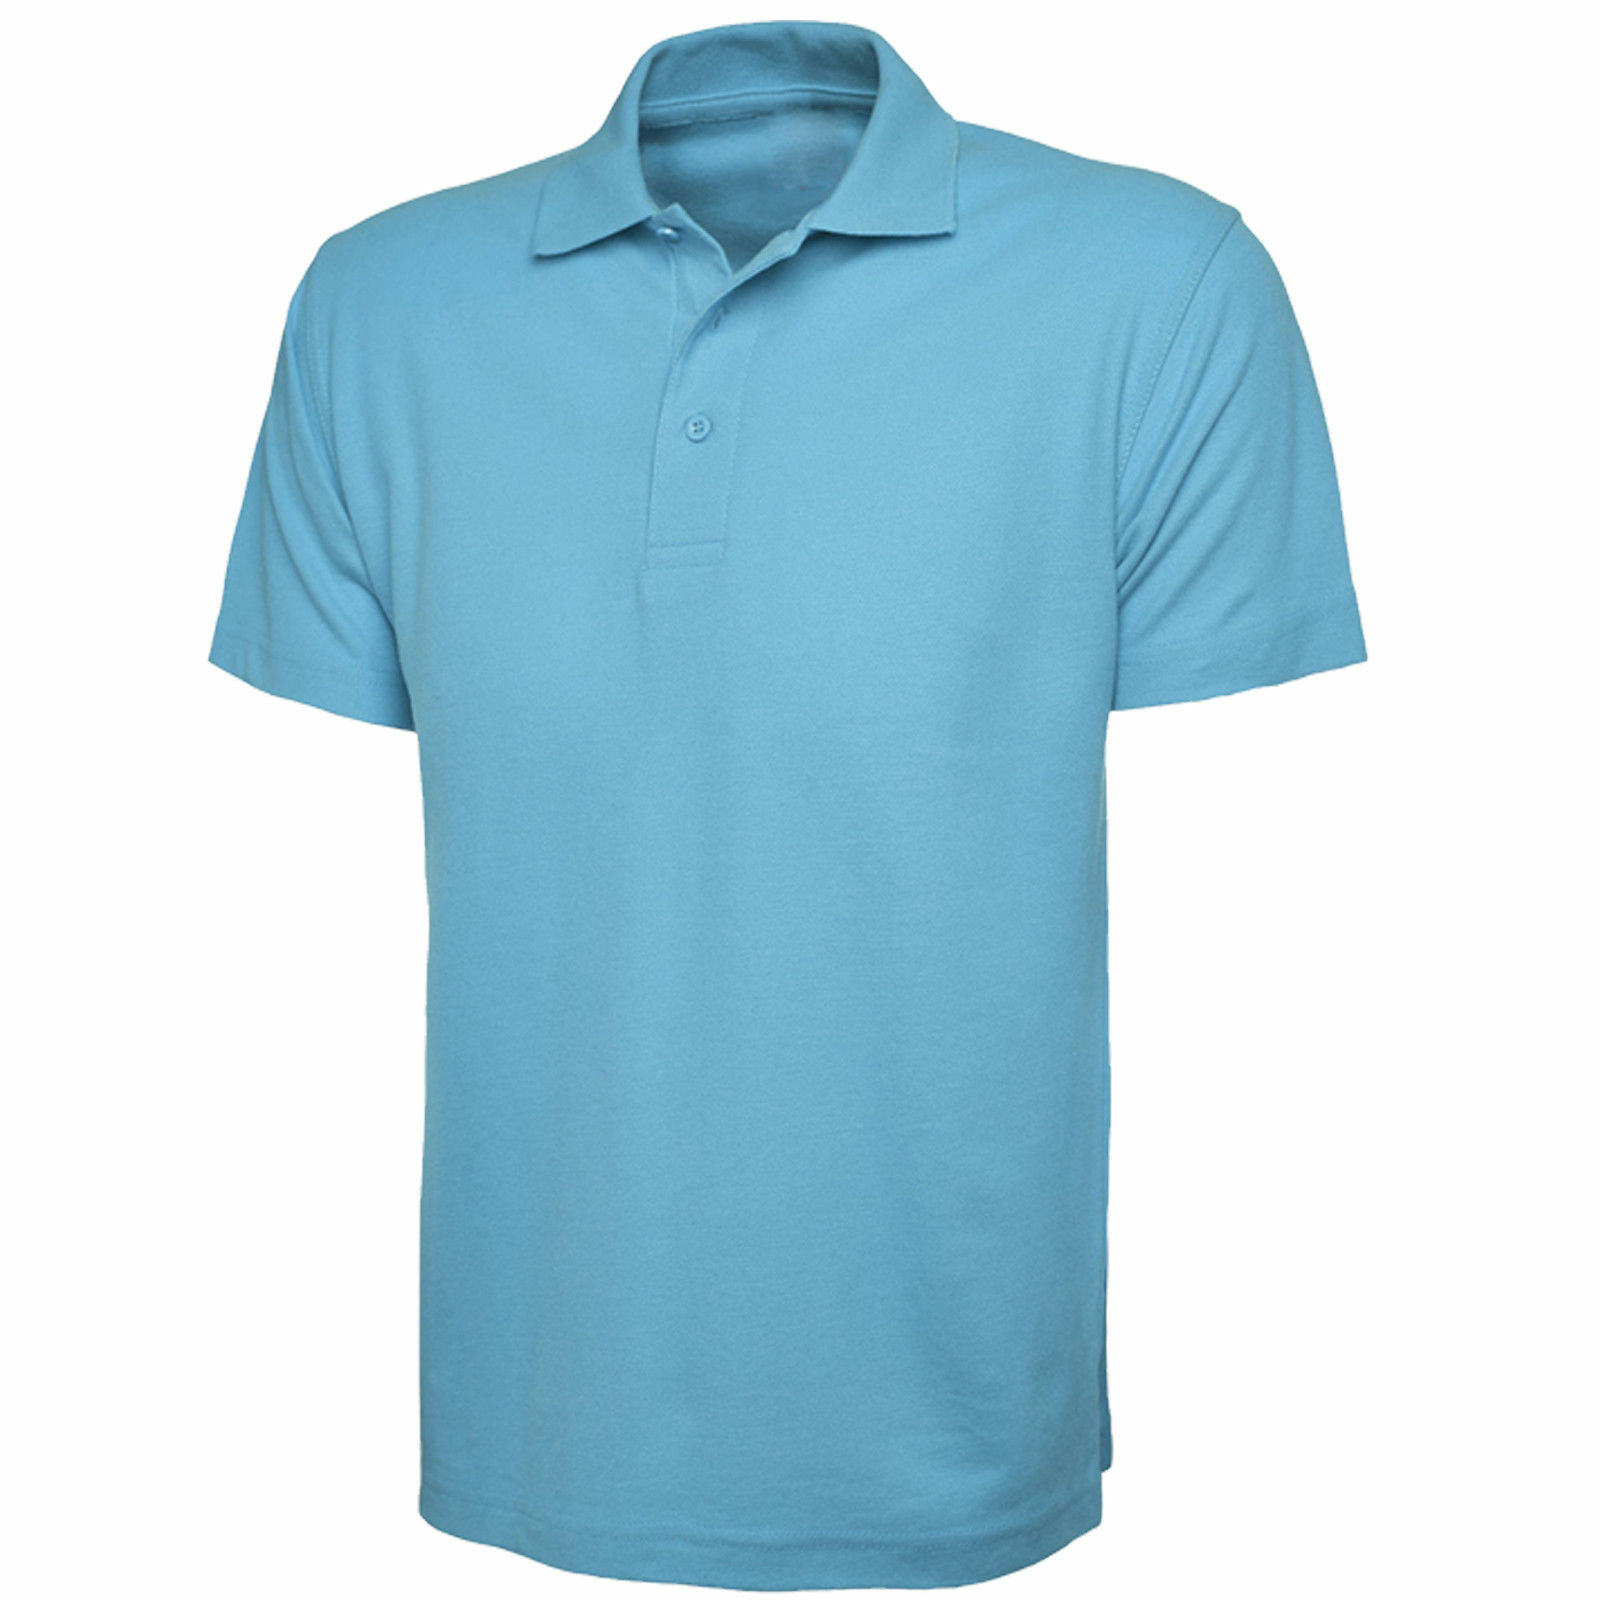 Polo T-Shirt Regular Fit for Boys & Girls School Uniform-SKY BLUE ...